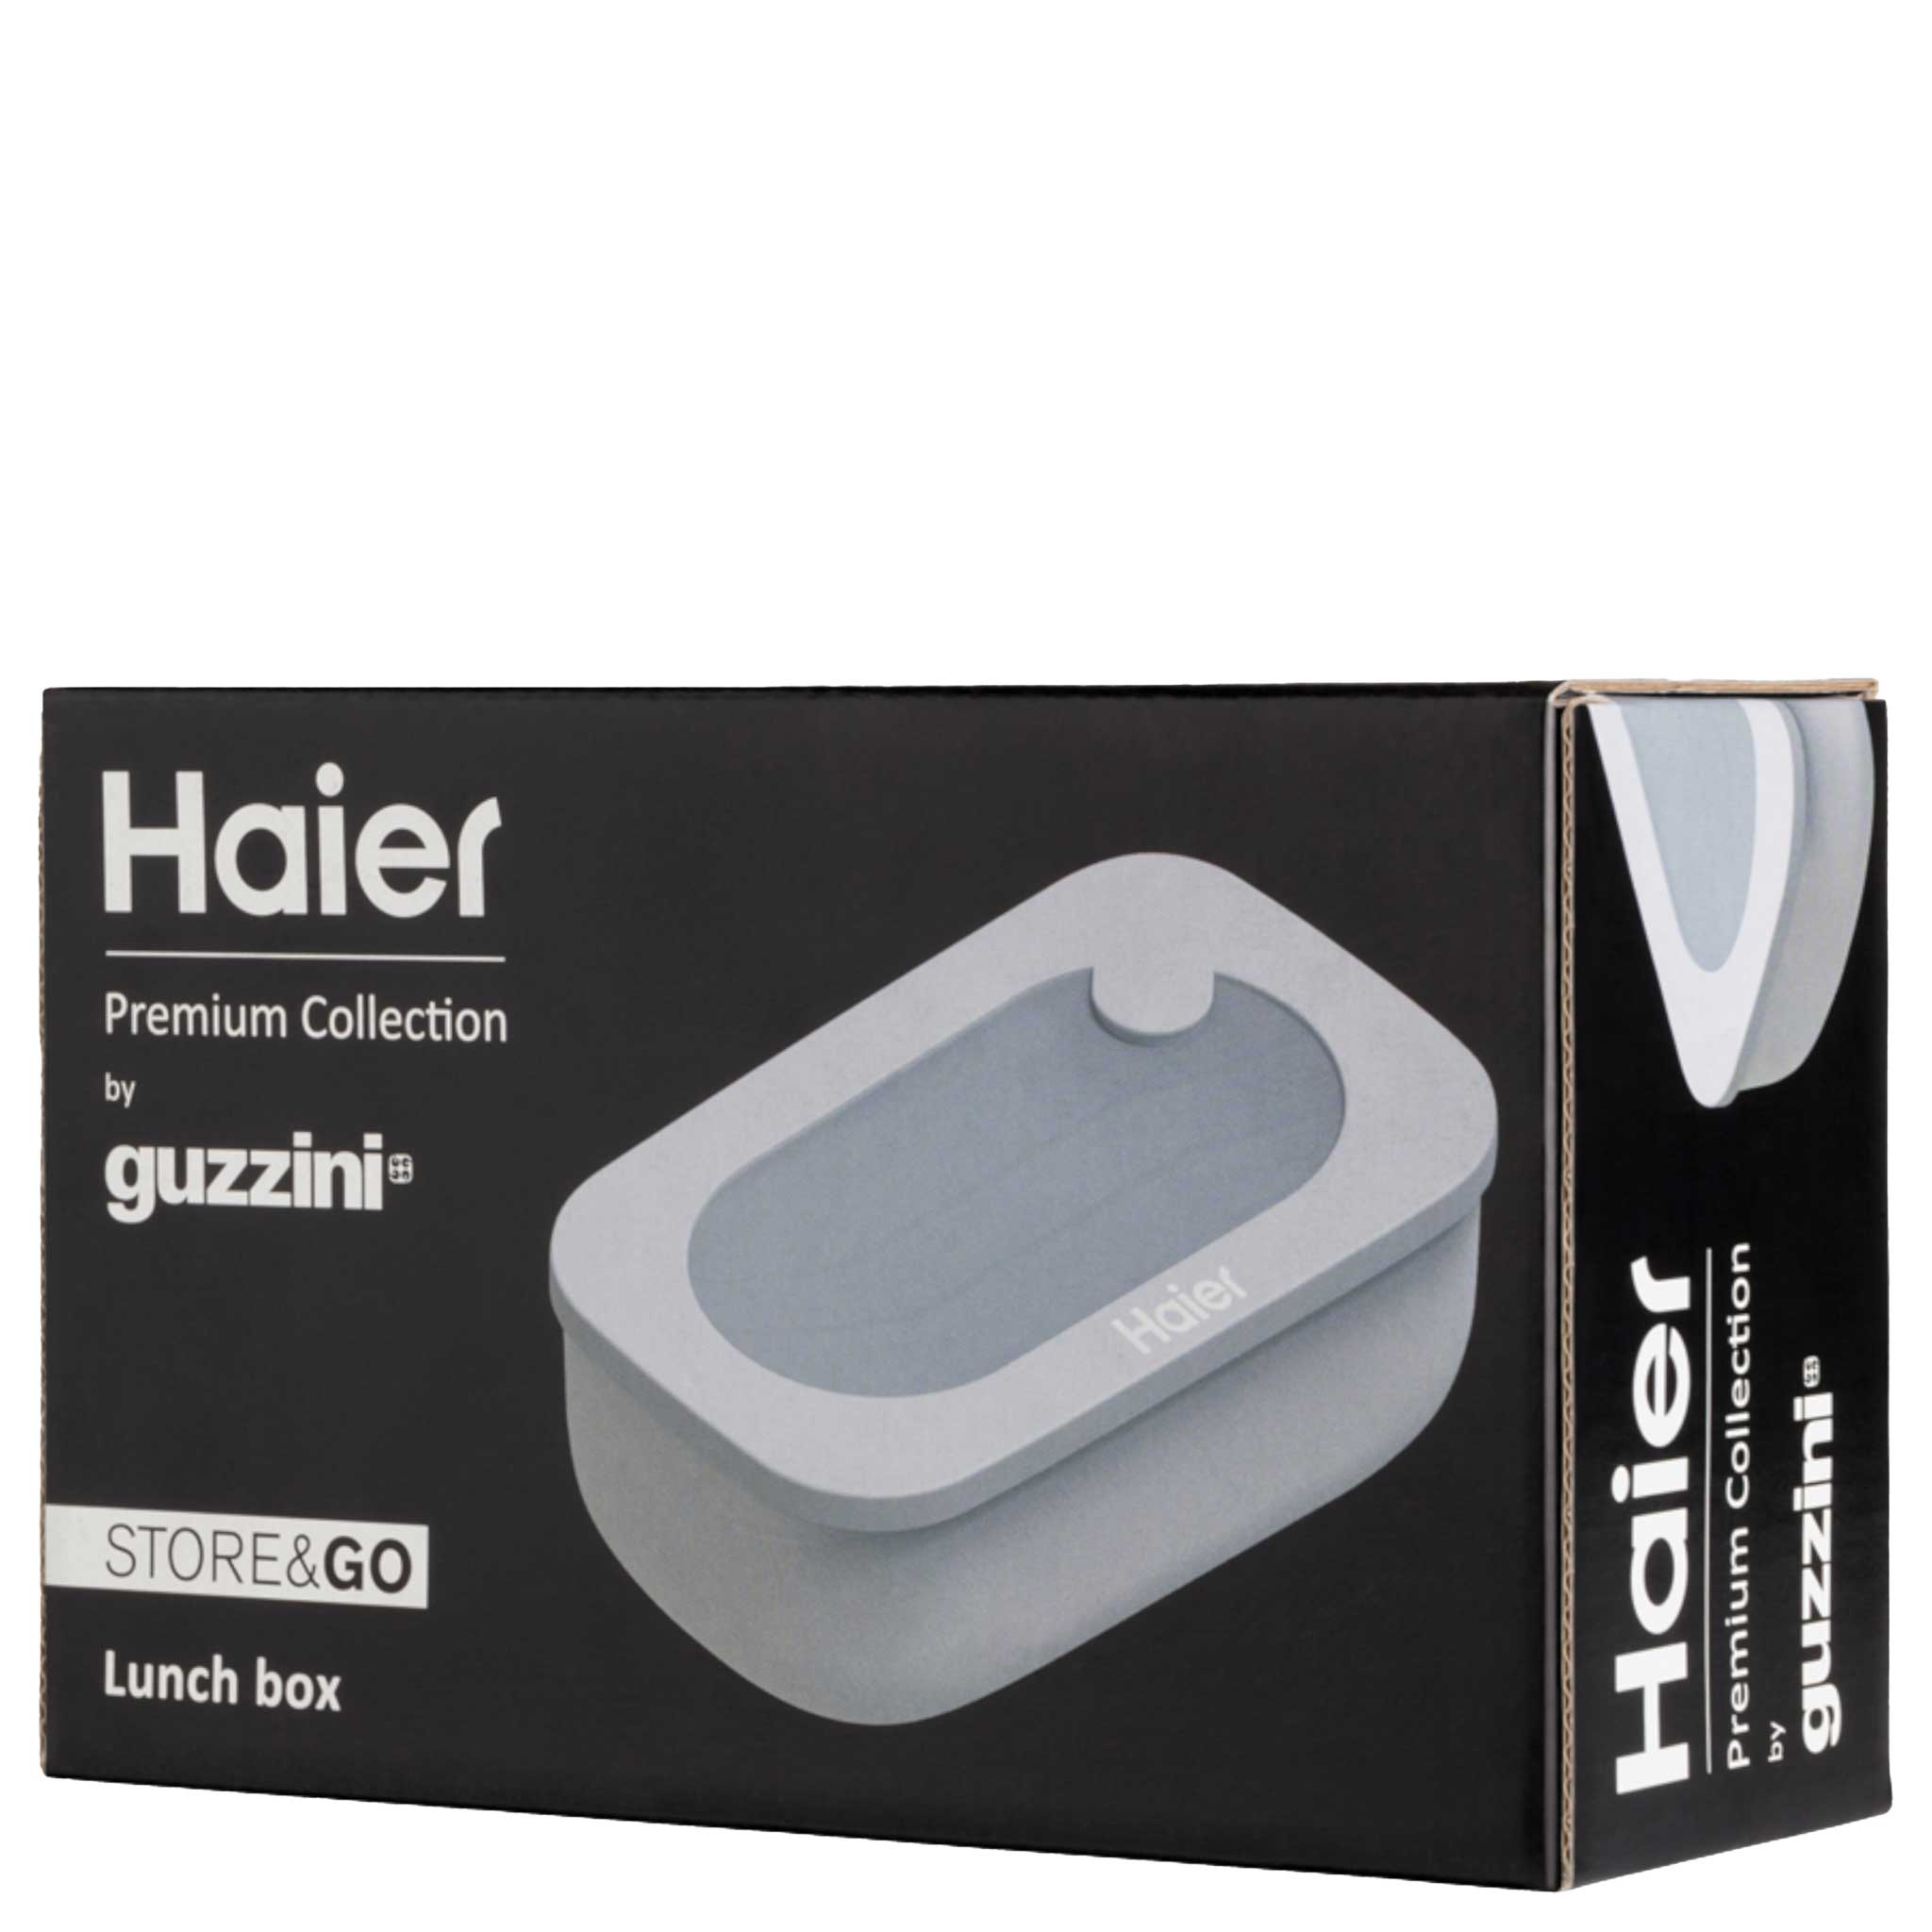 Haier By Guzzini Lunch box